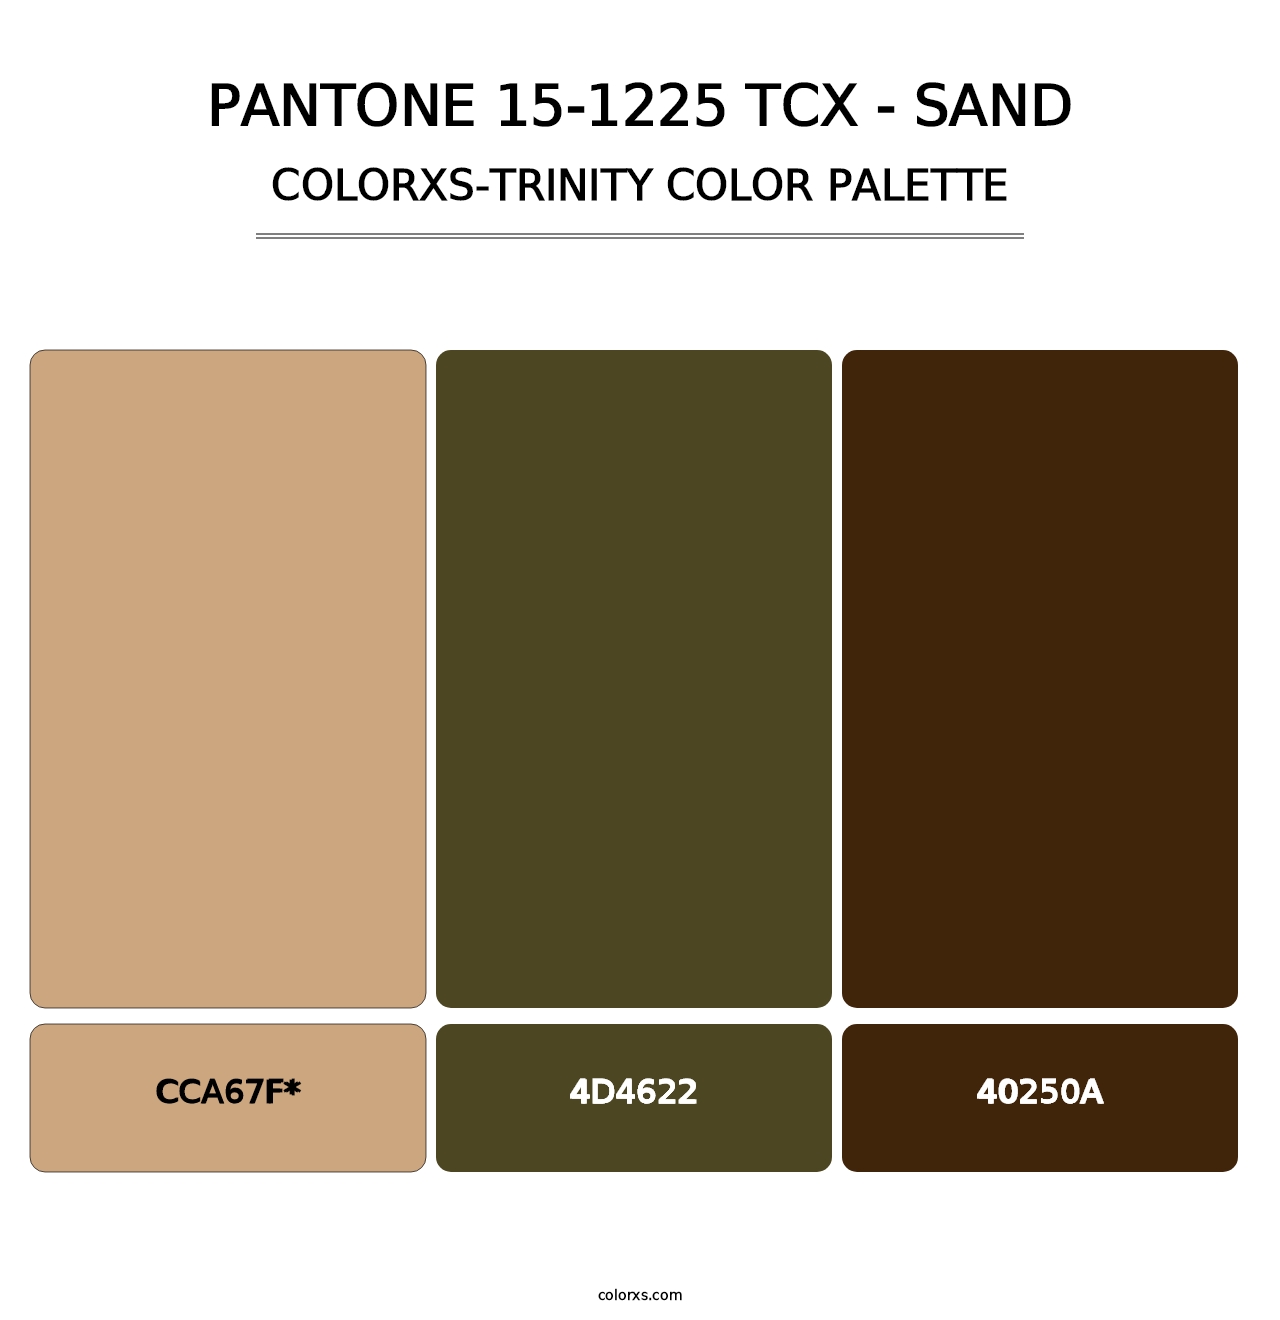 PANTONE 15-1225 TCX - Sand - Colorxs Trinity Palette